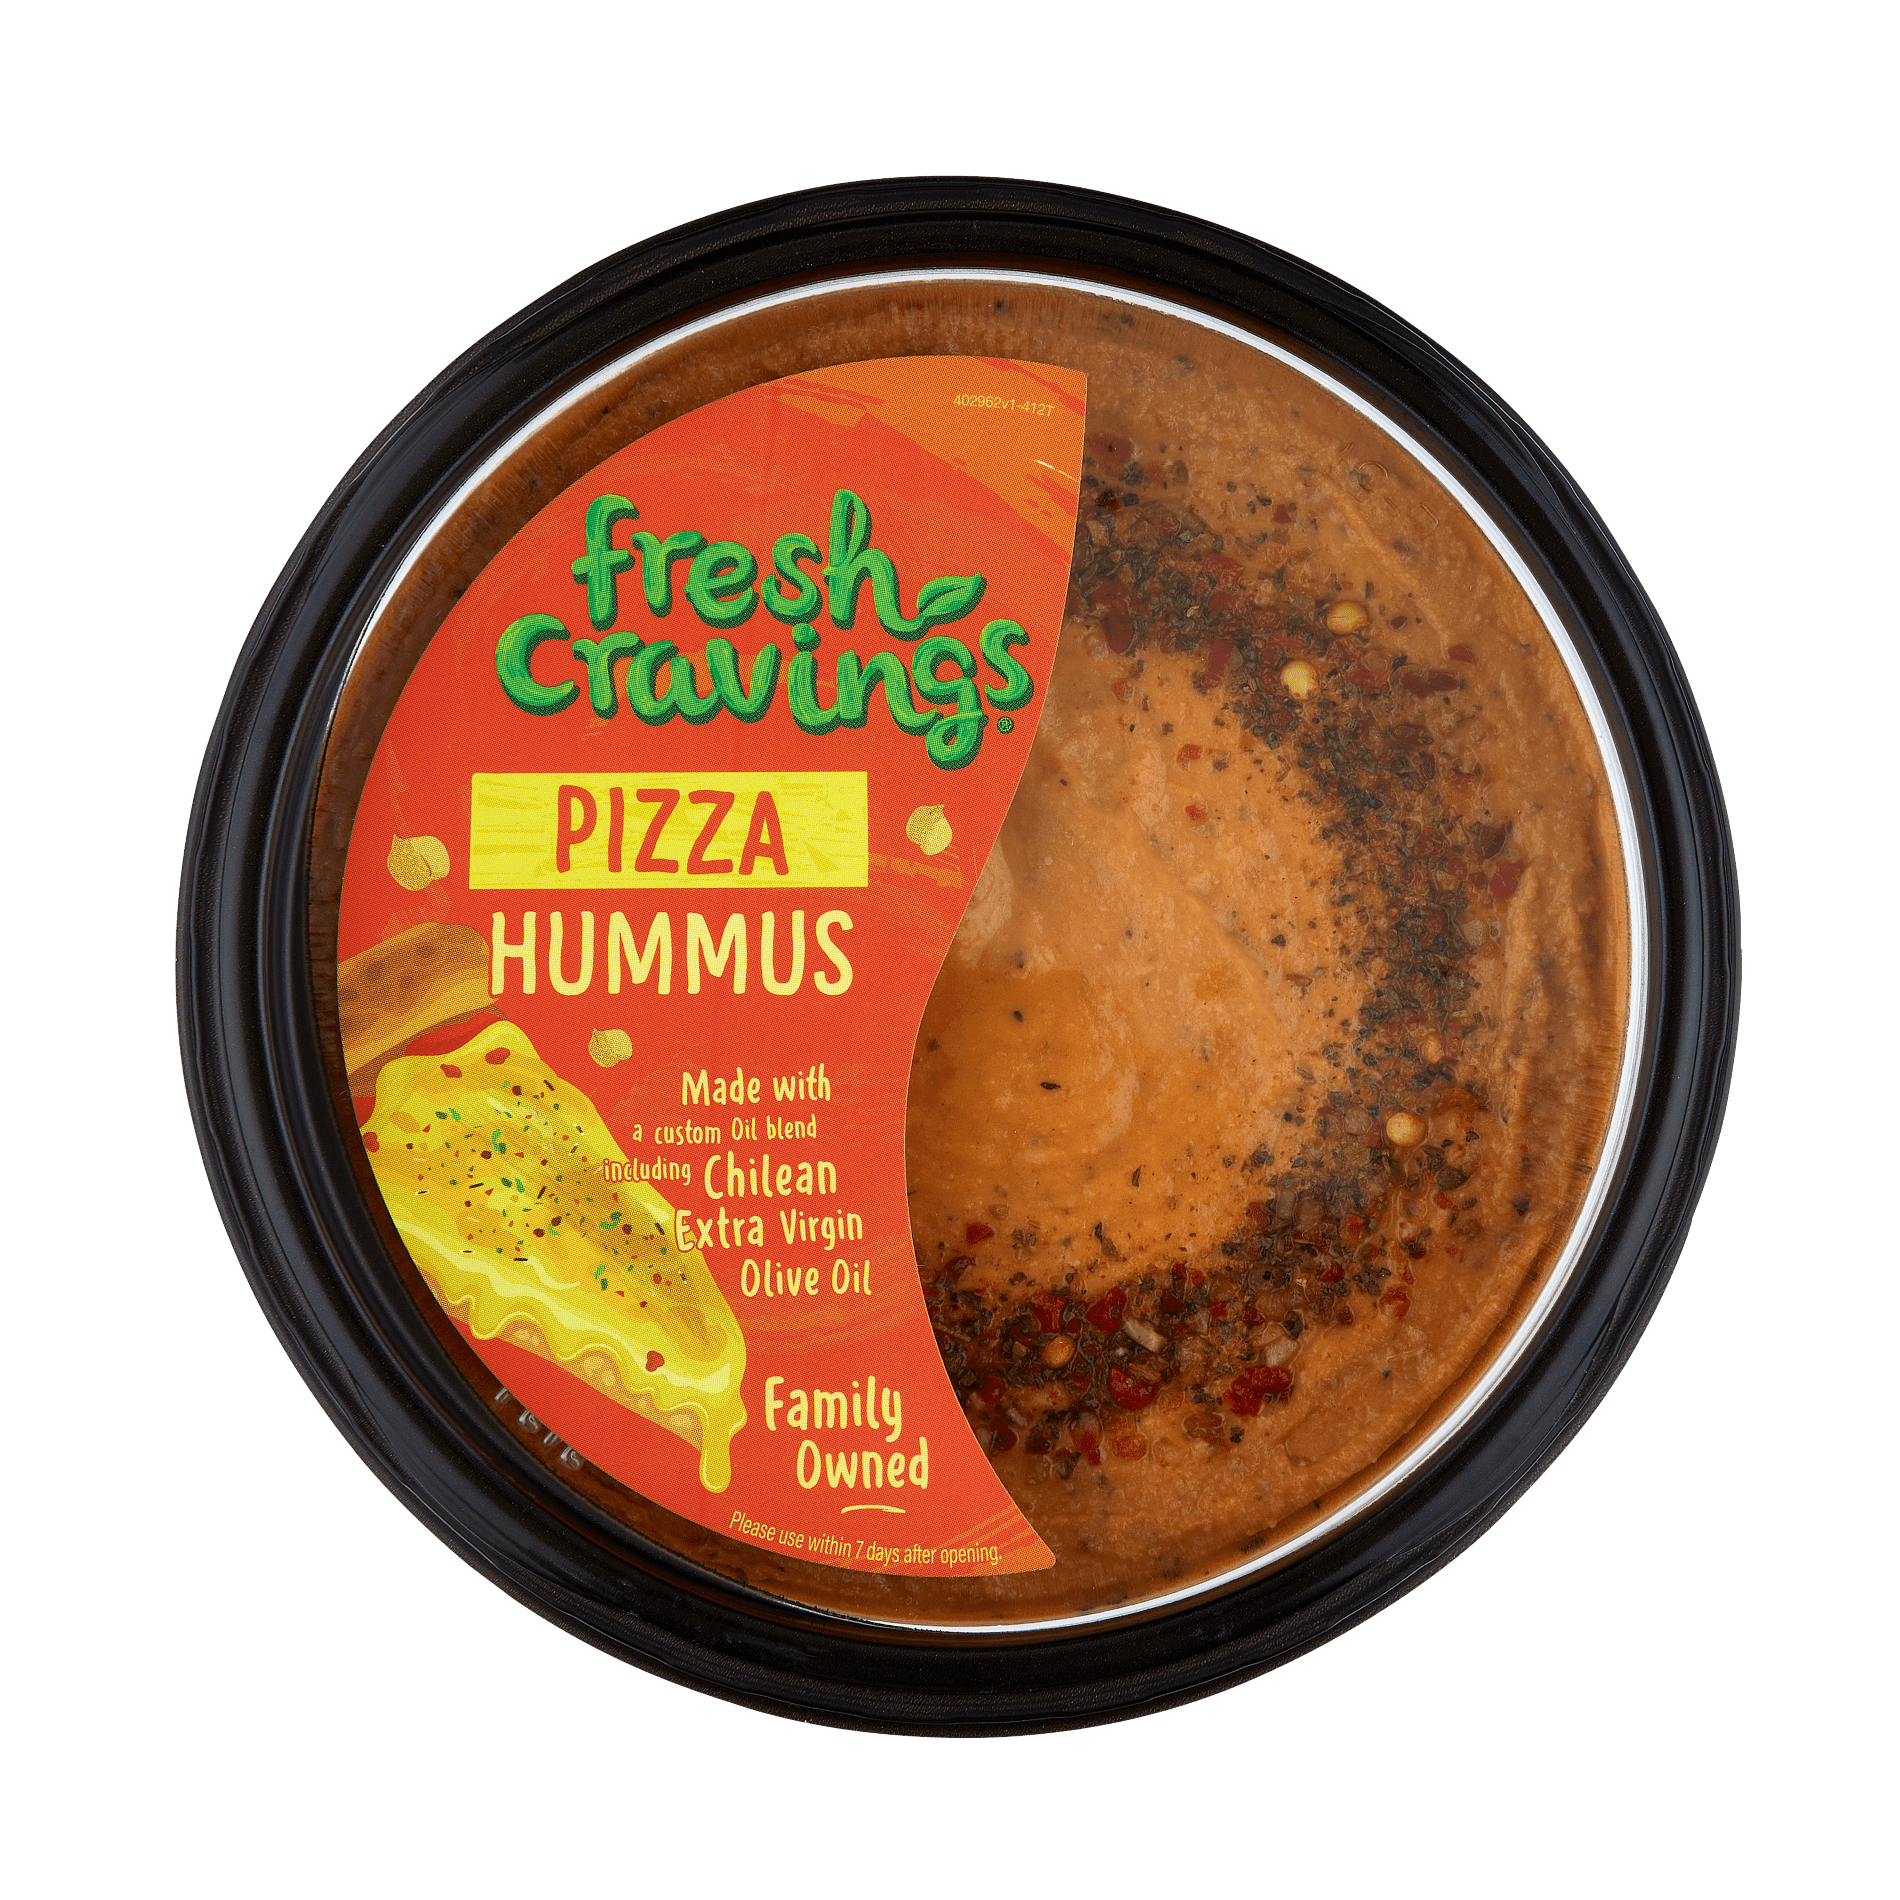 Fresh Cravings Pizza Hummus,10oz. Plastic Tub, Gluten-Free, 2 Tbsp (32g)